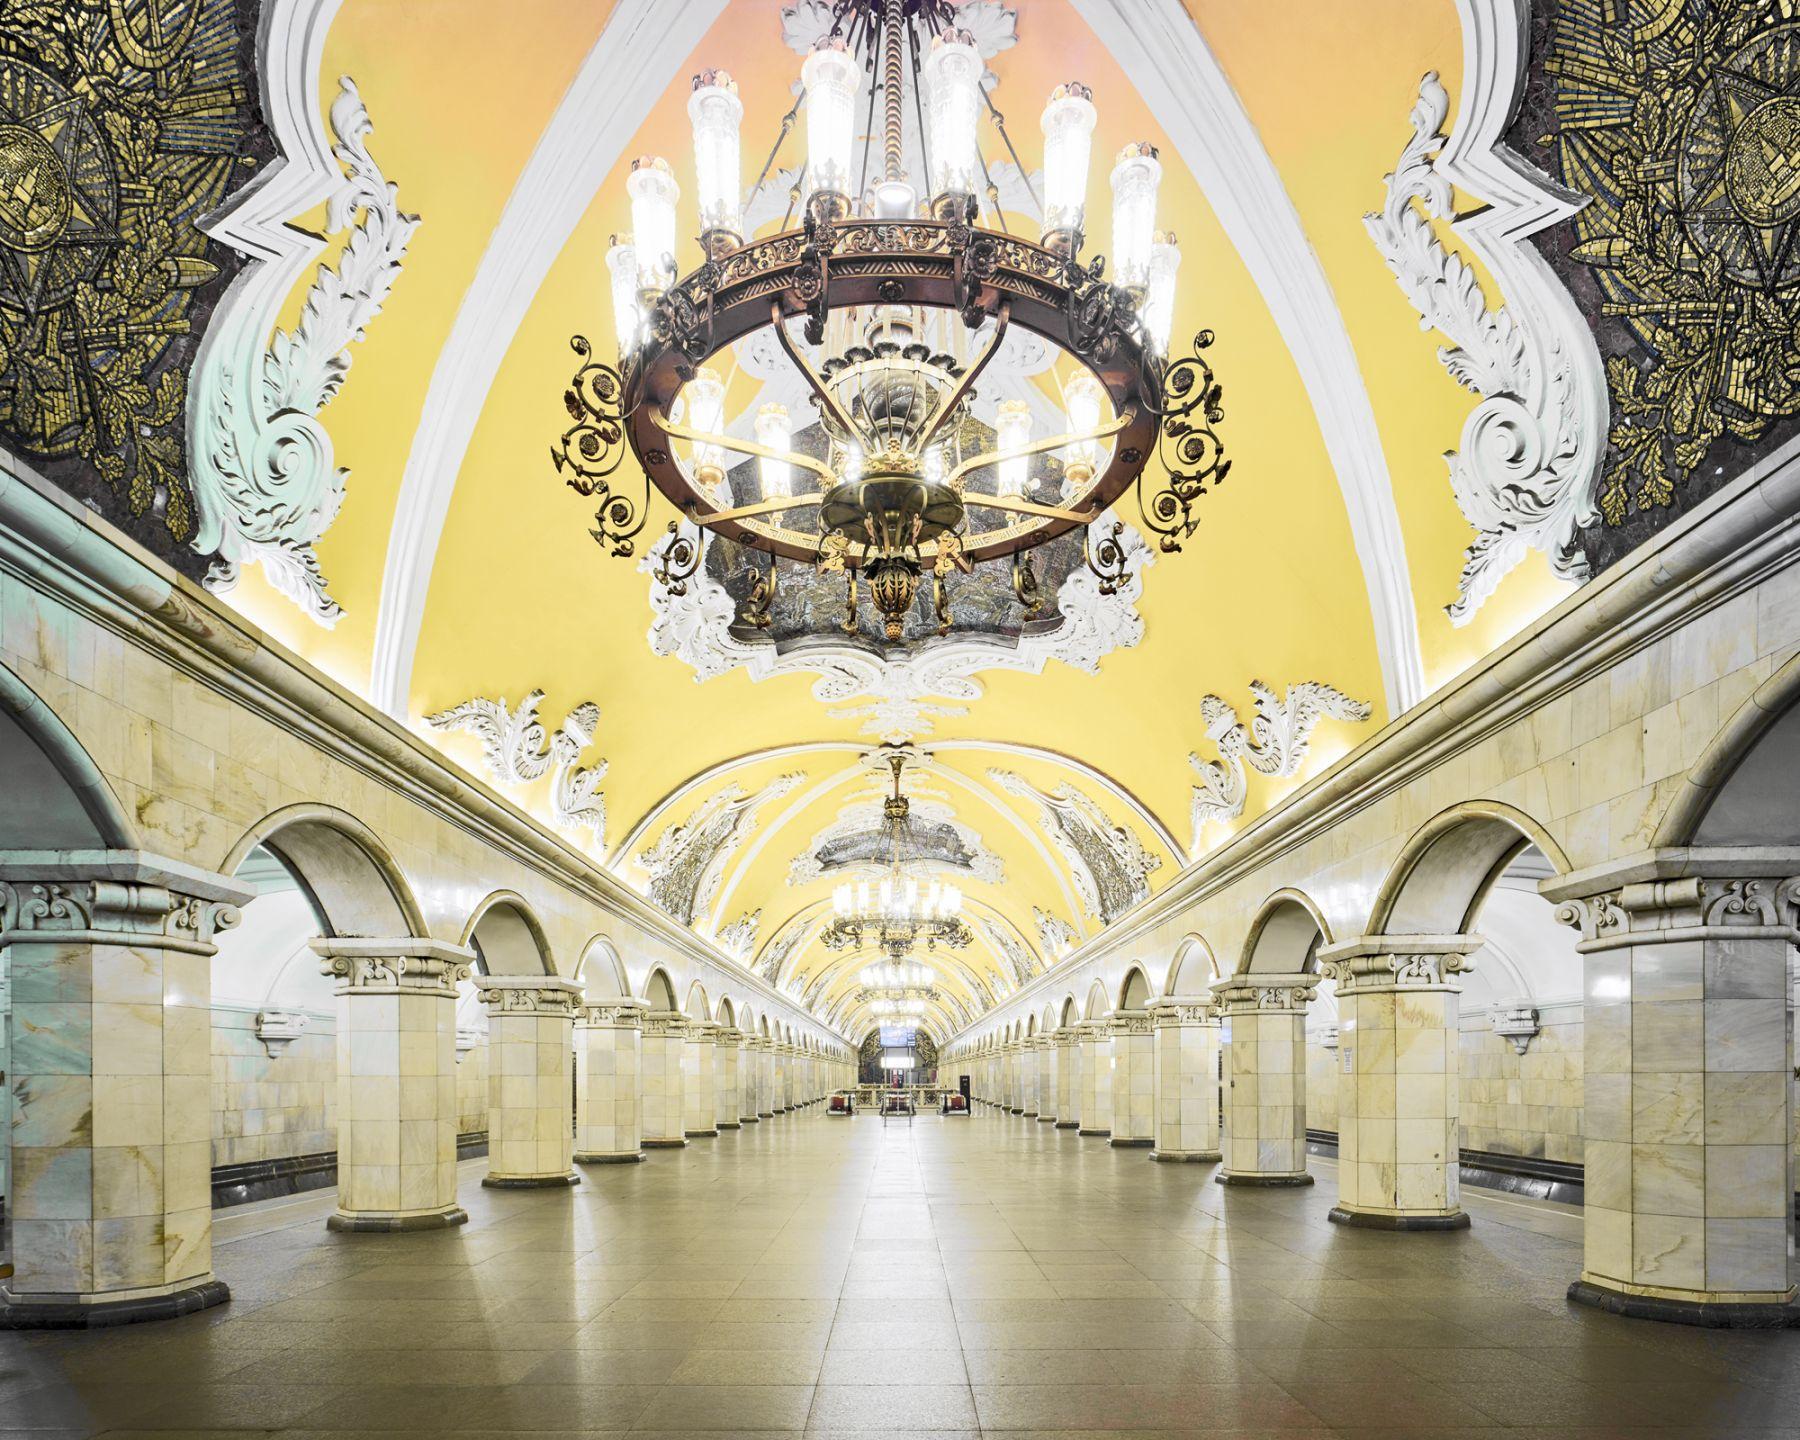 Color Photograph David Burdeny - Station métro Komsomolskaya, Moscou, Russie